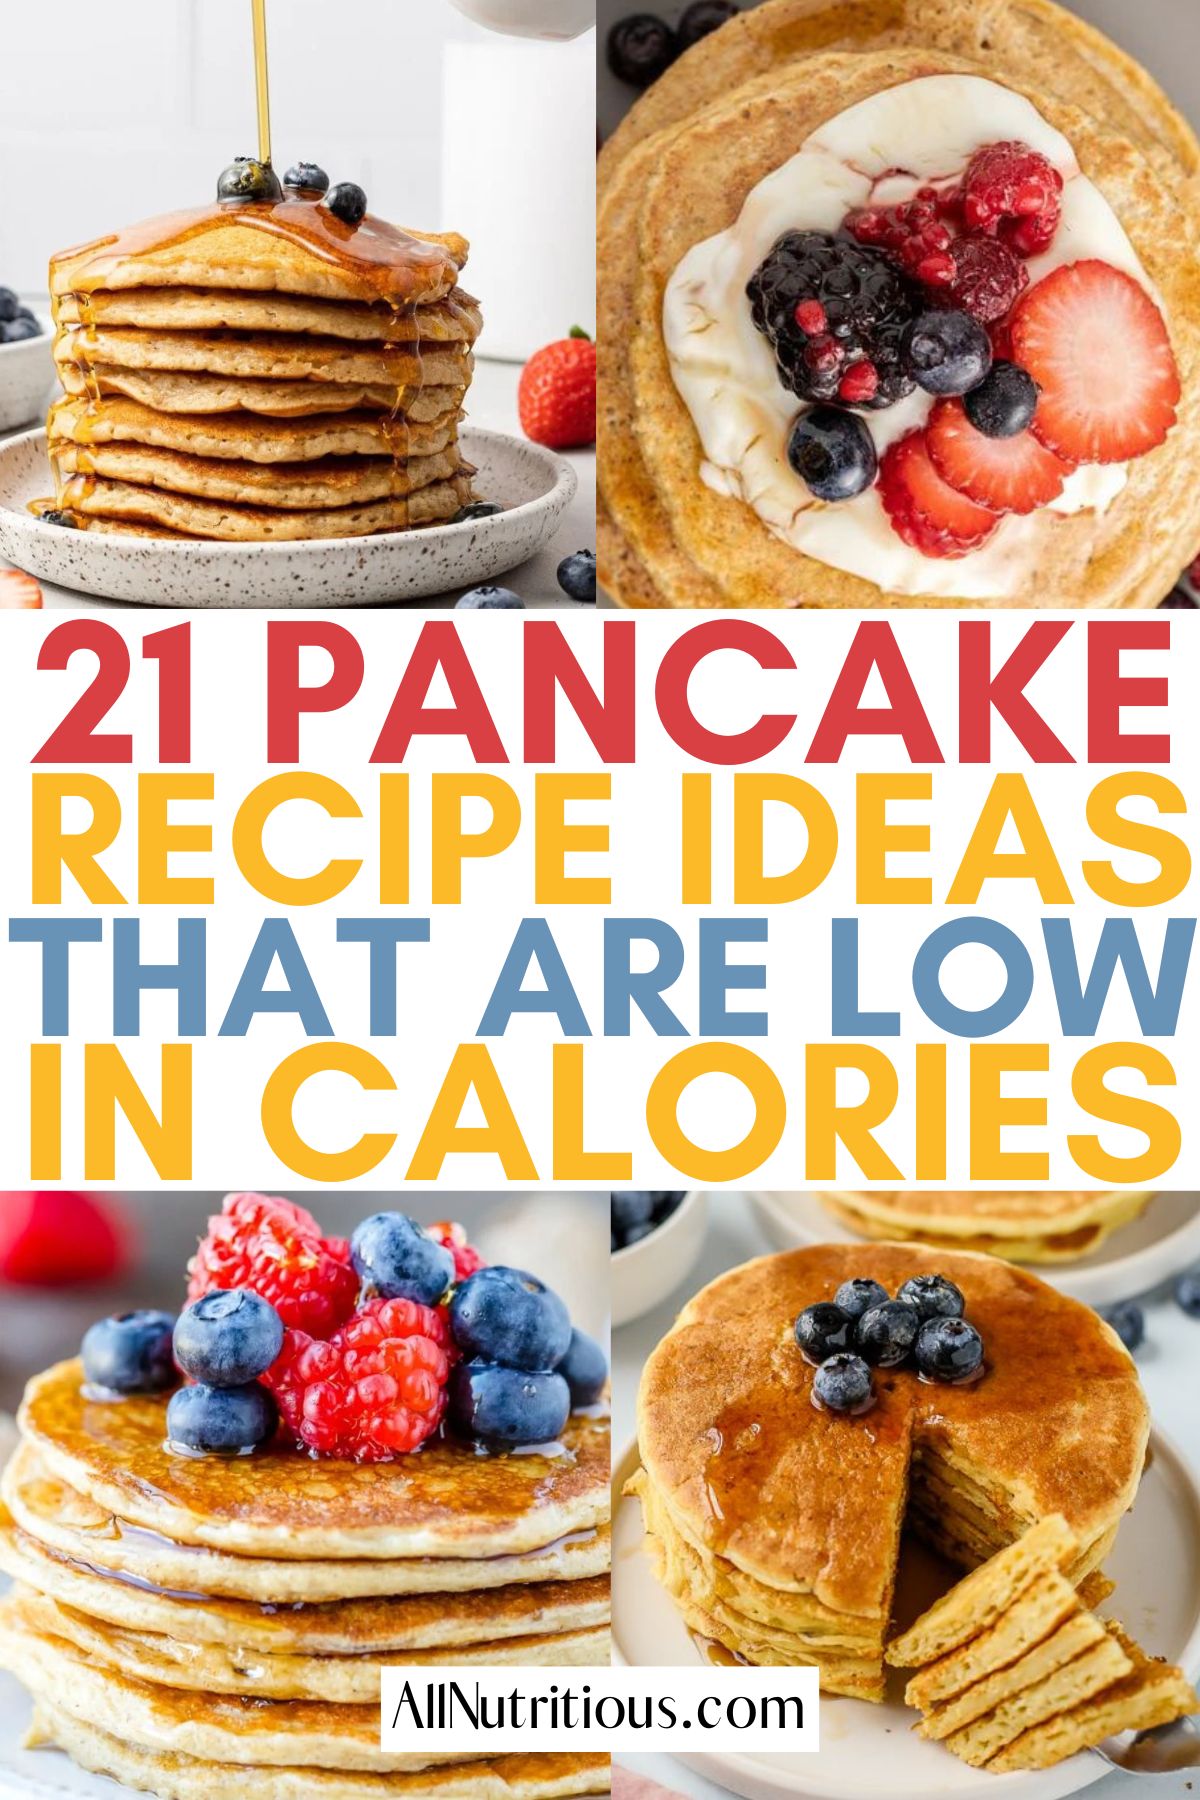 Low calorie pancake recipes